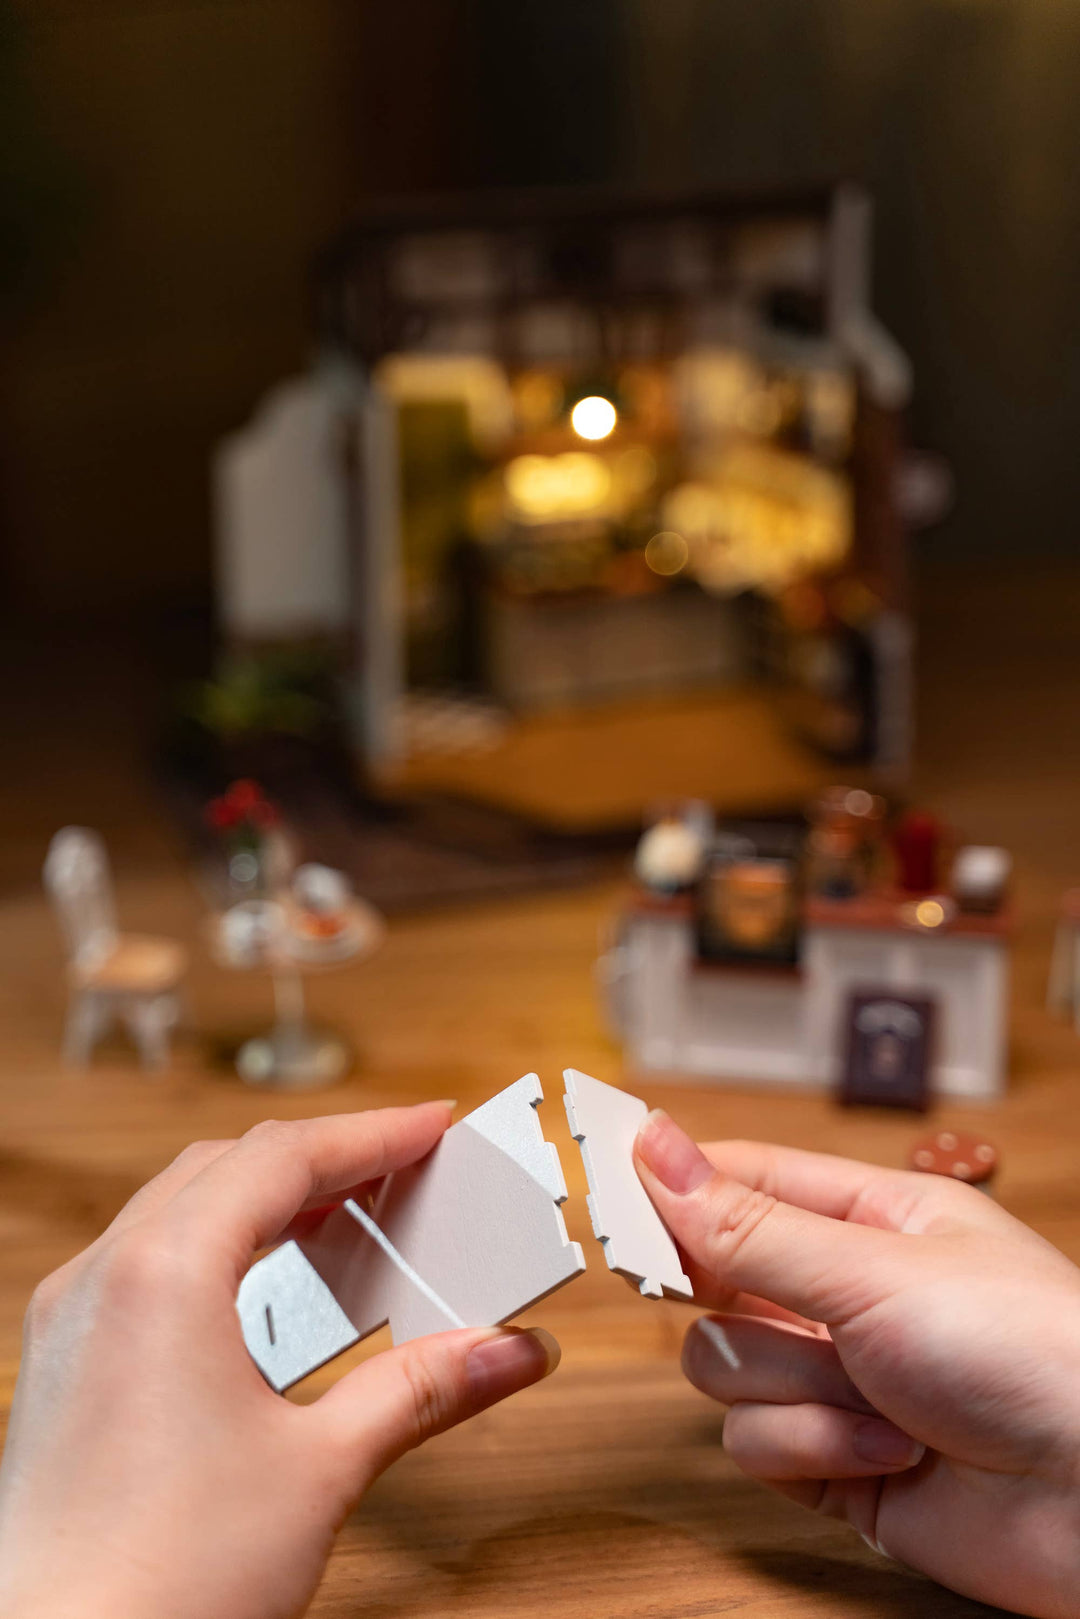 DIY Miniature House Kit: No. 17 Café